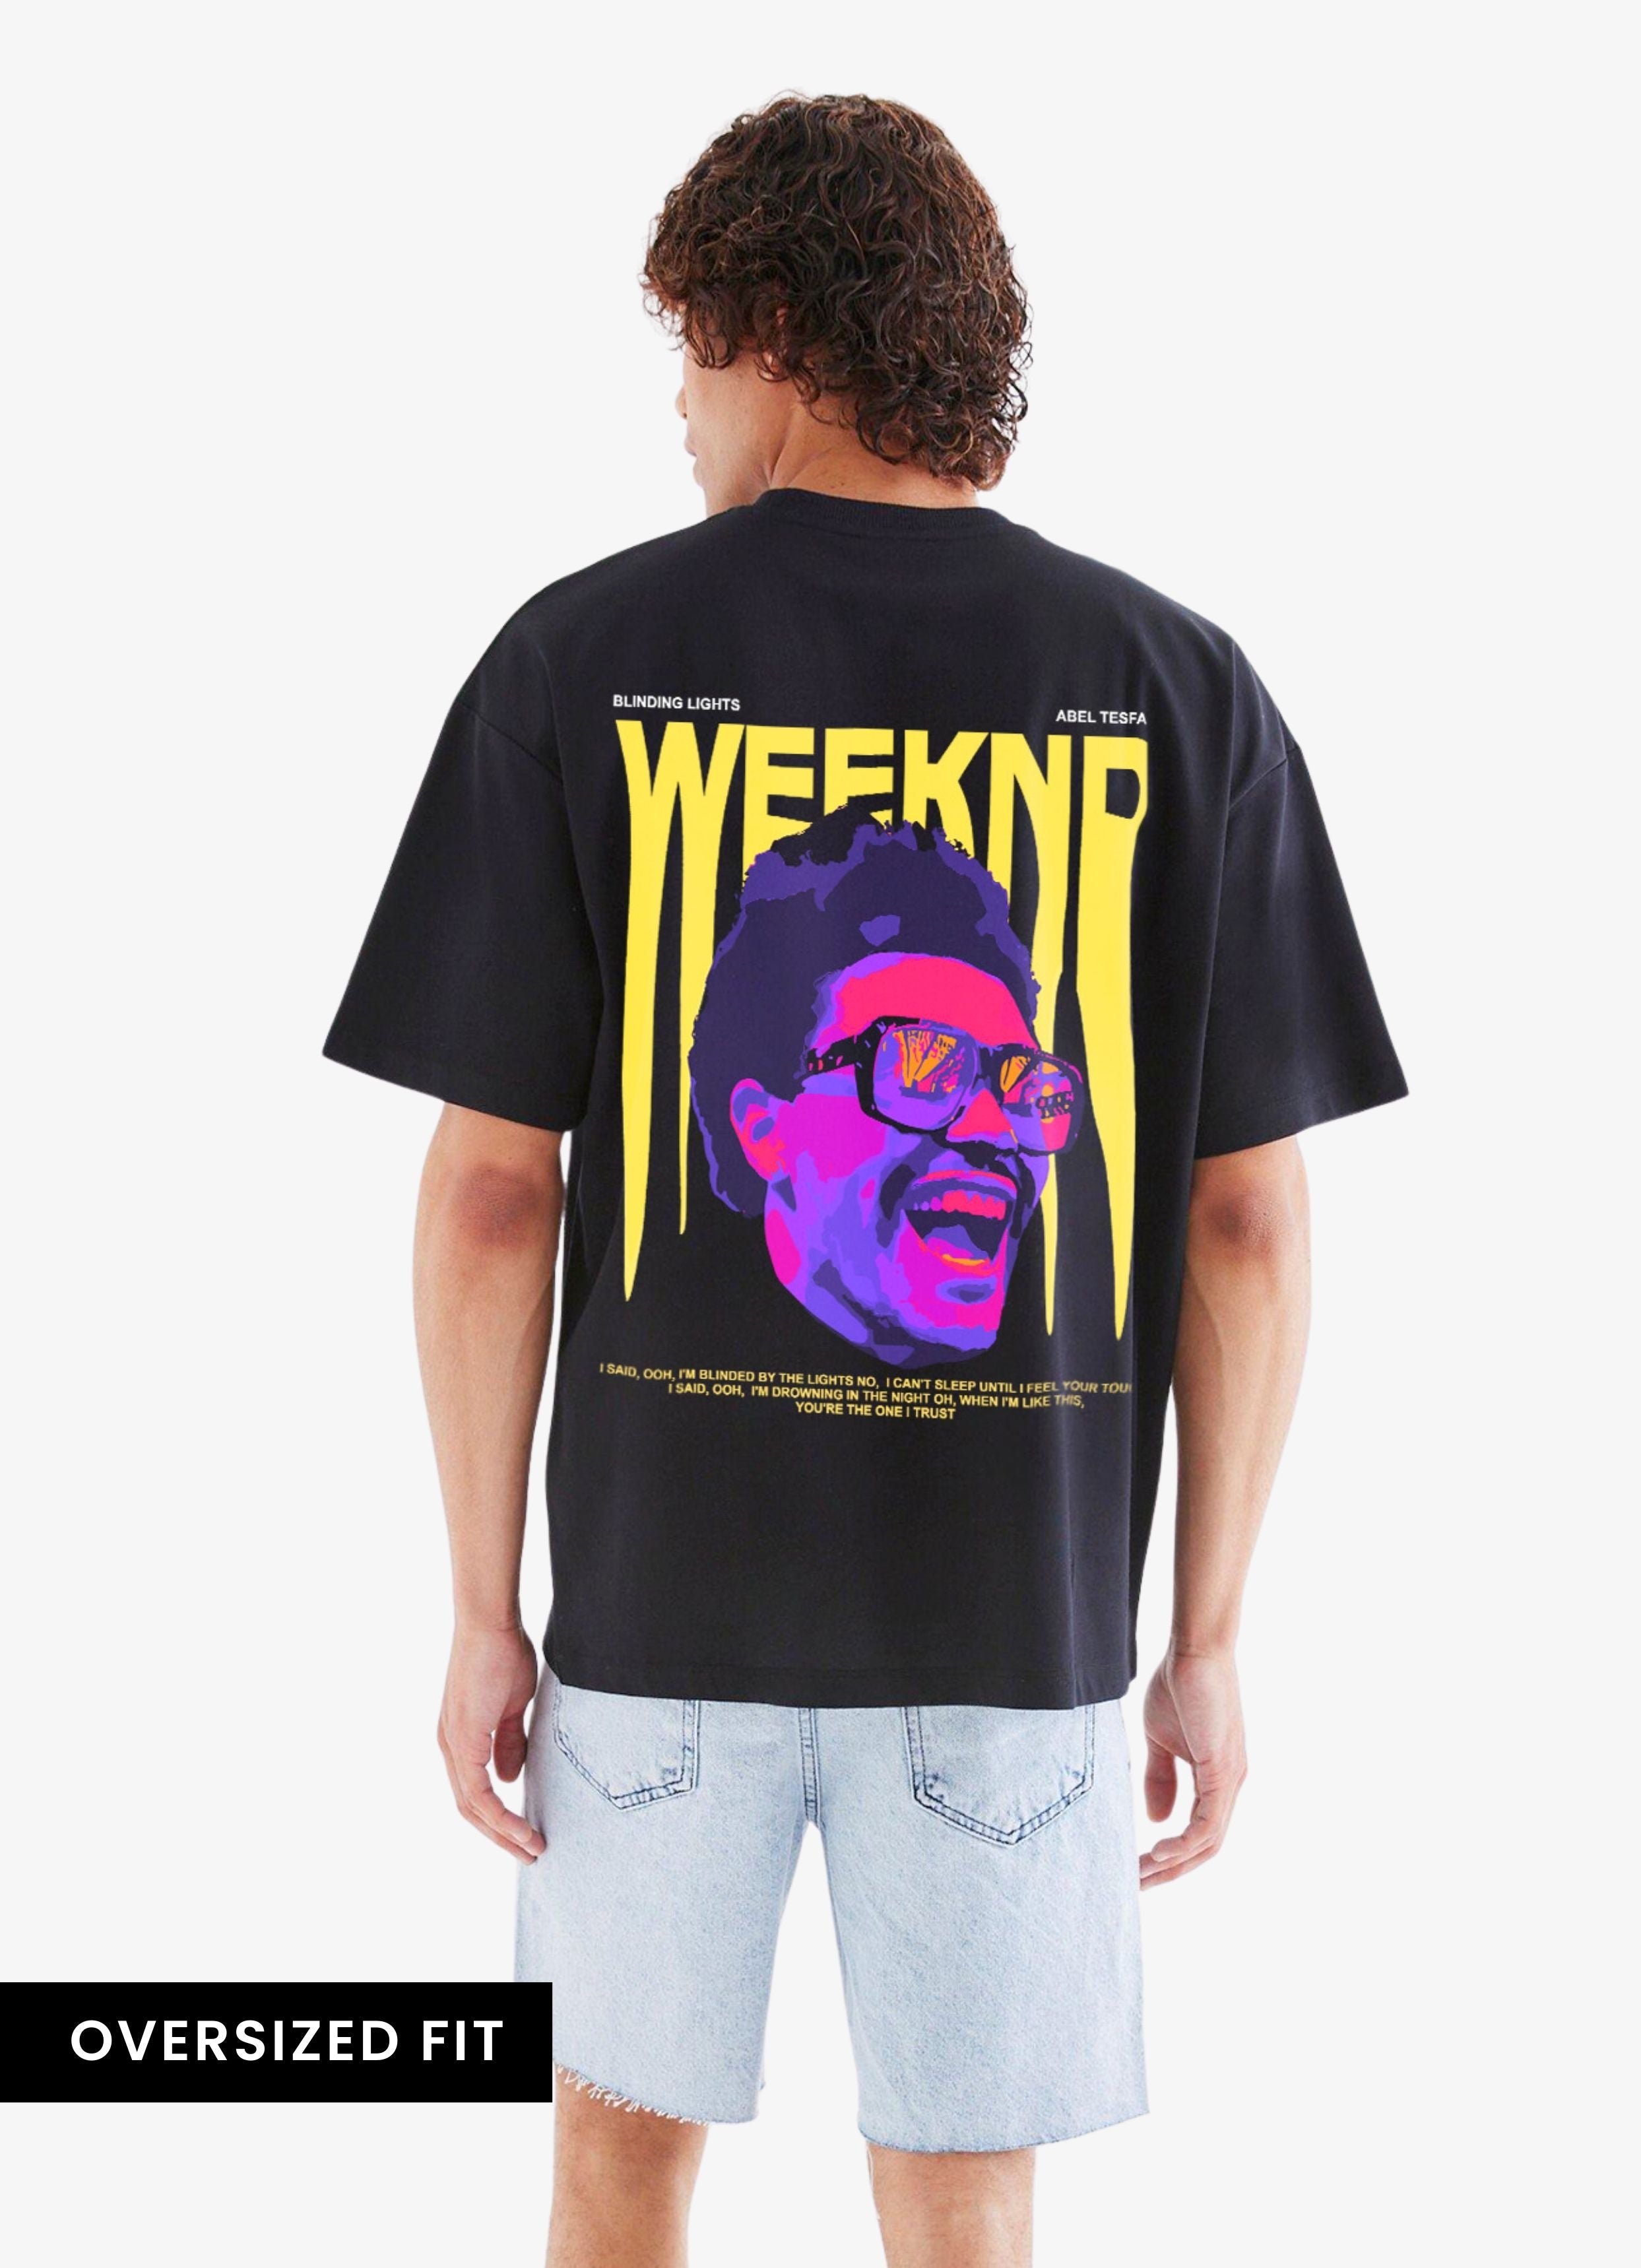 The Weeknd Back Oversized Tshirt